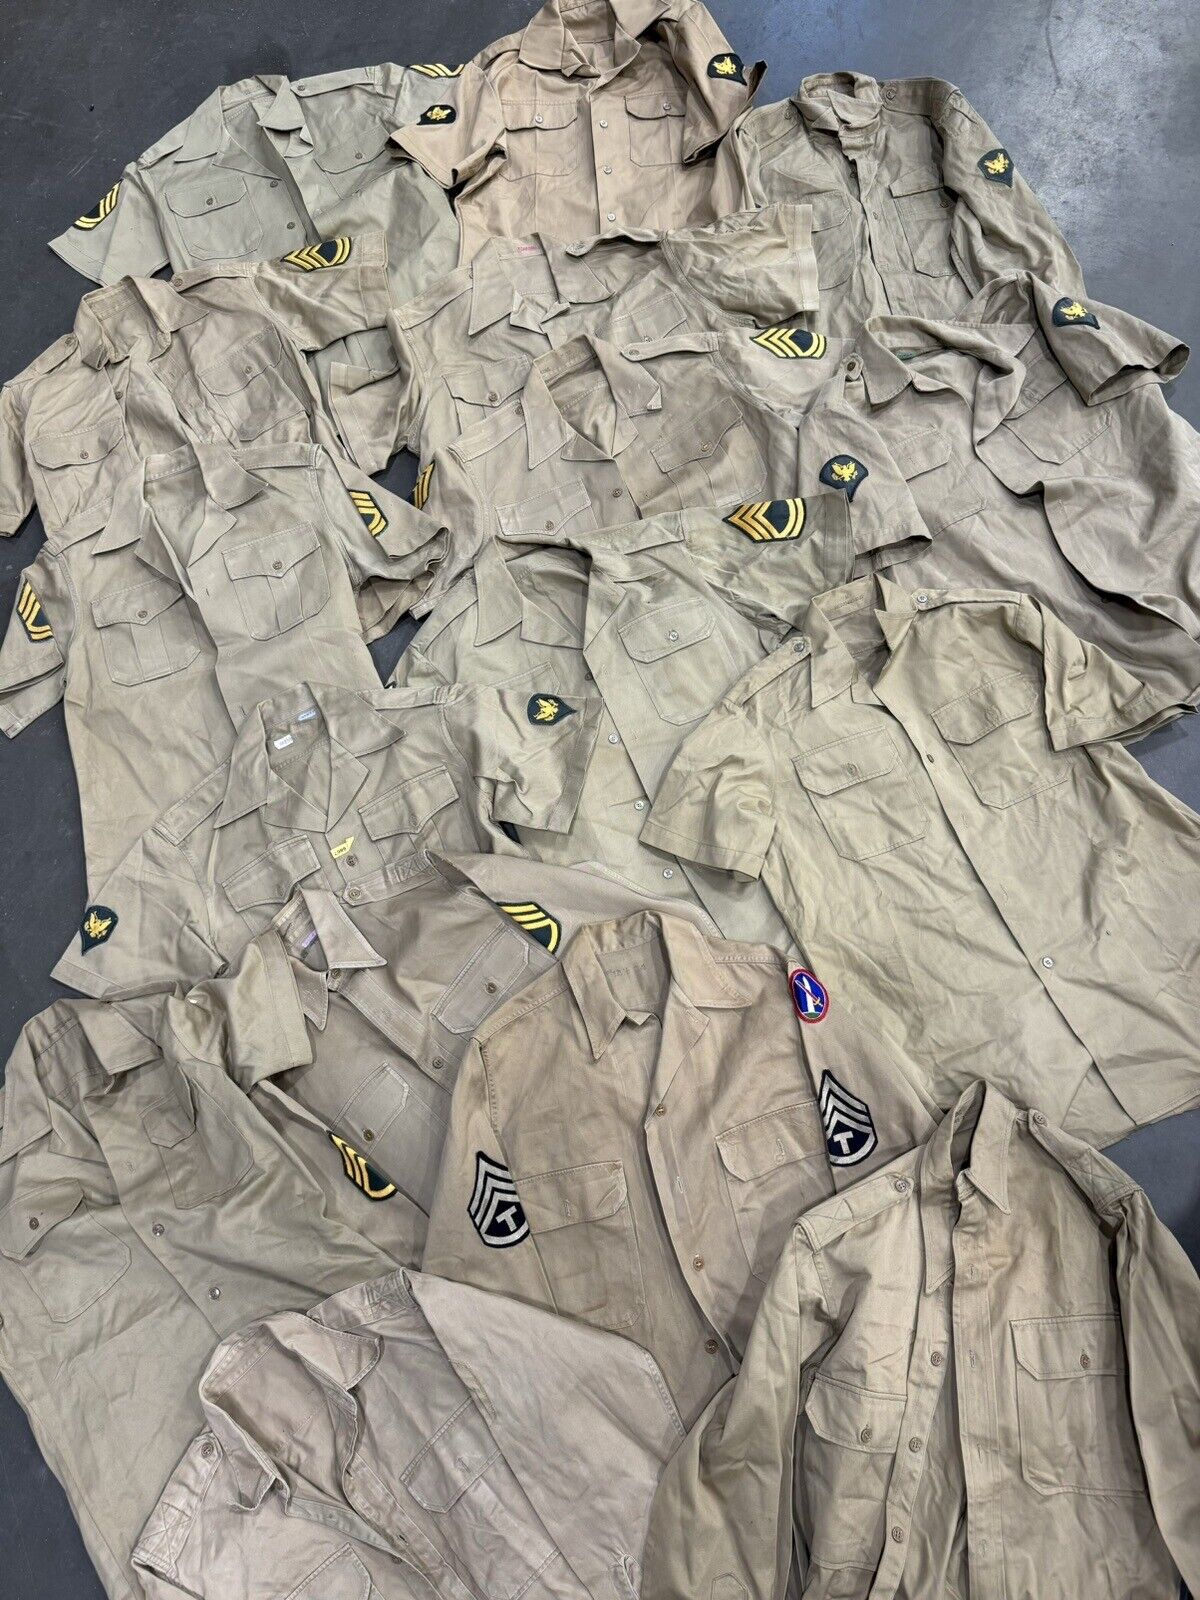 Vintage USMC Khaki Tan Military Shirts 1940s 50s 60s 70s WW2 Vietnam Lot of 16